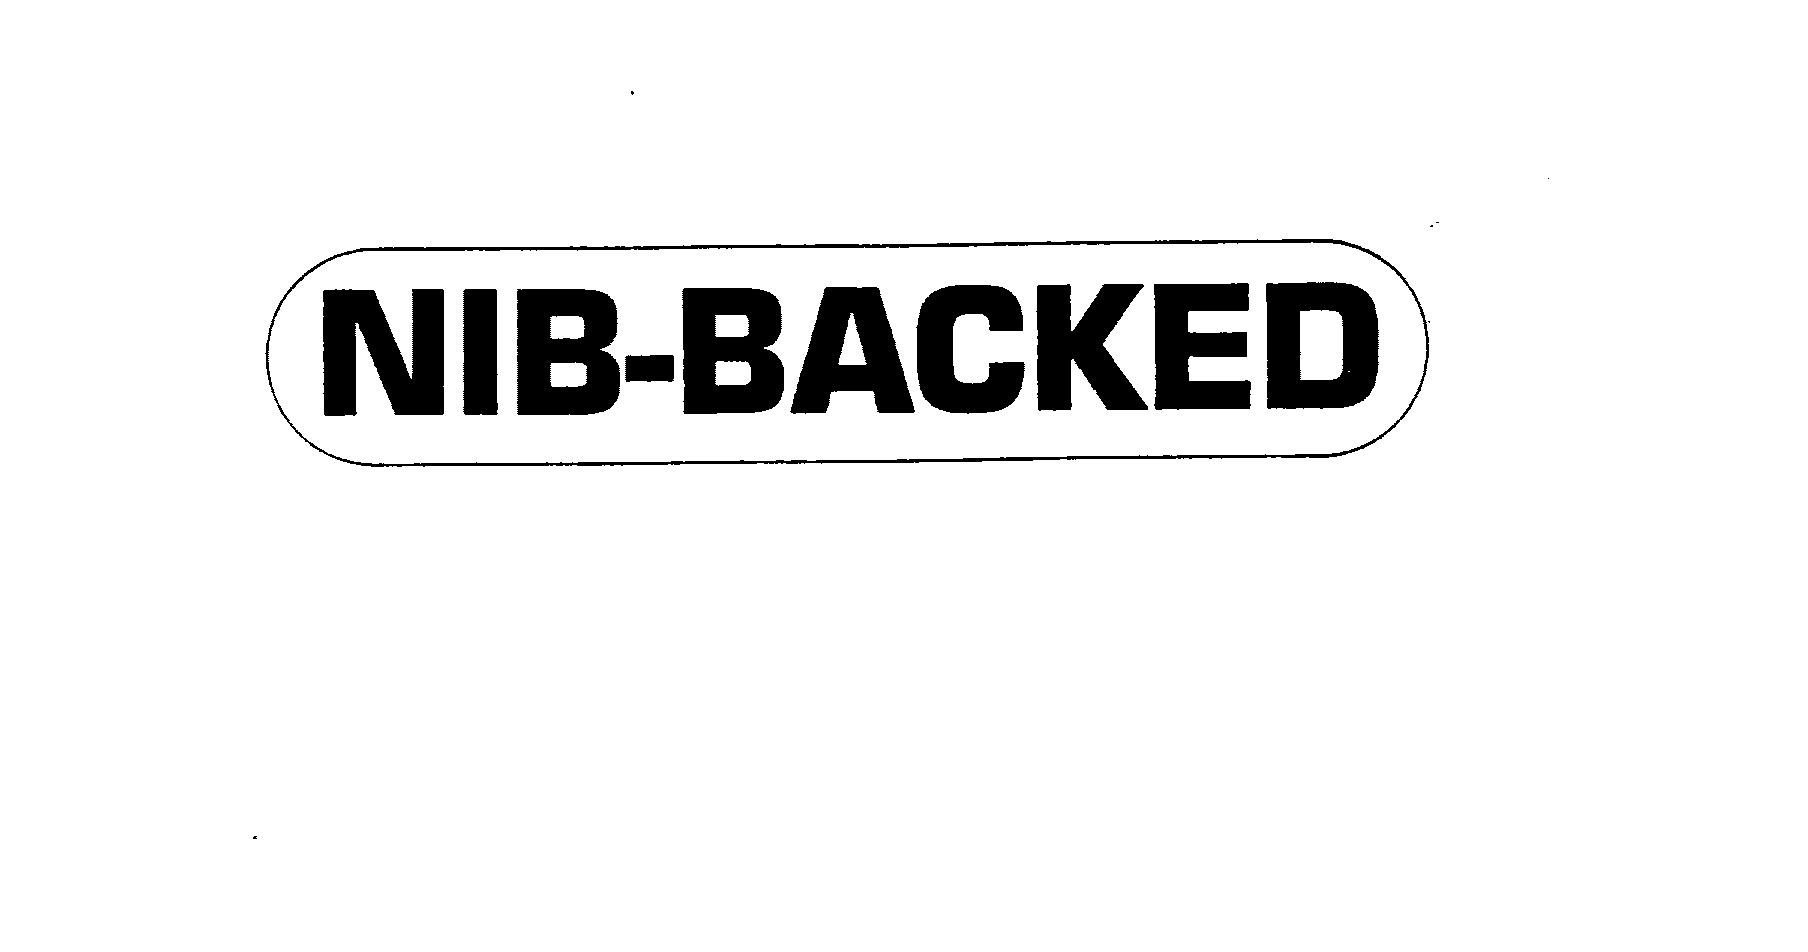  NIB-BACKED